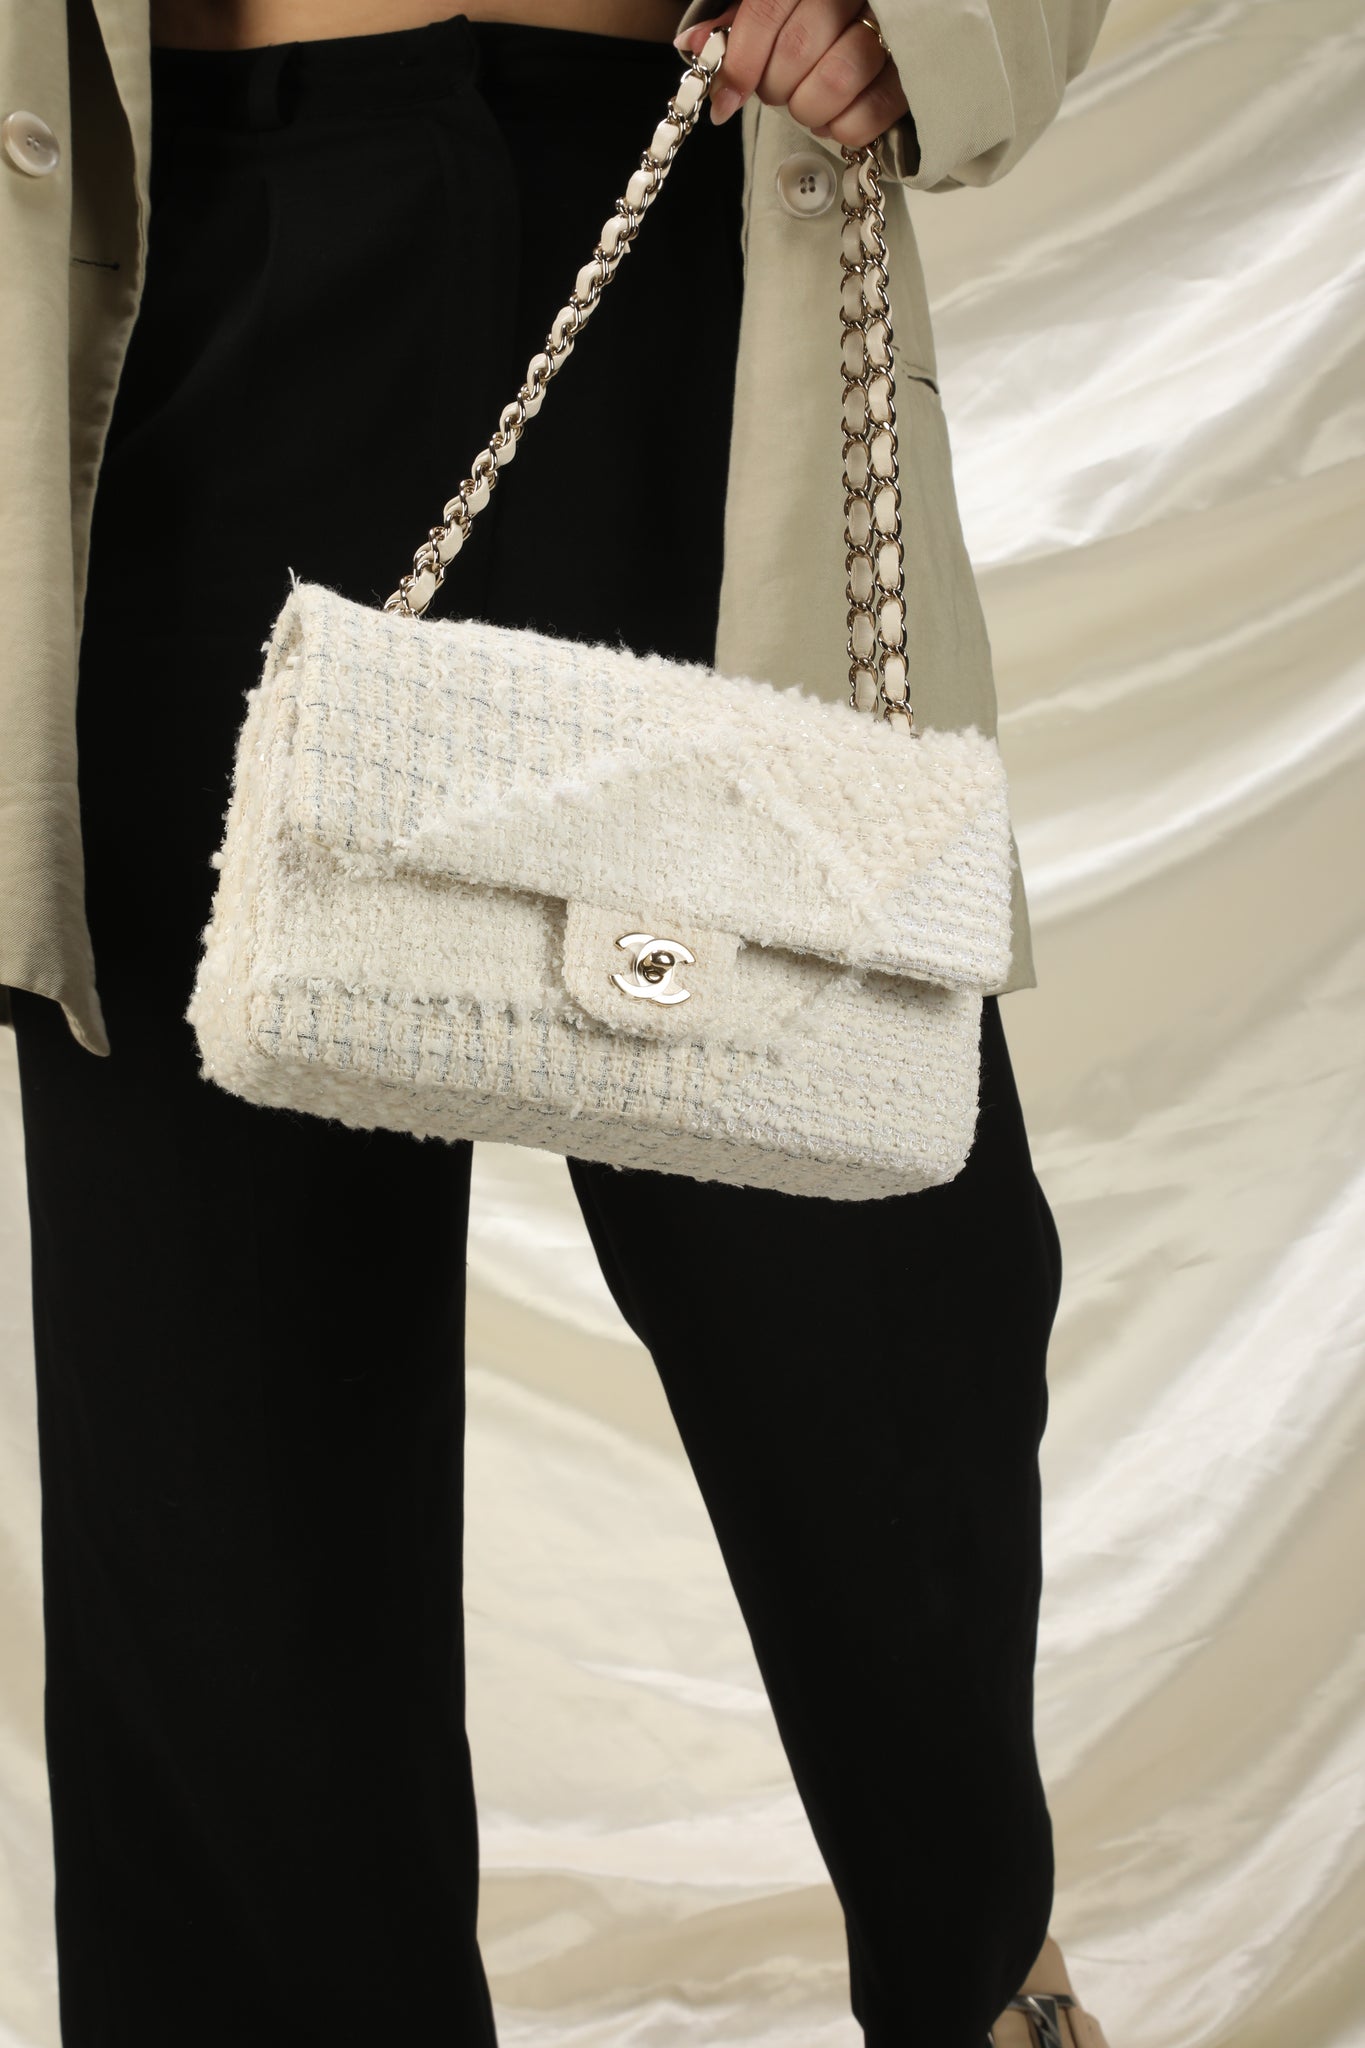 Chanel Tweed Flap Bag